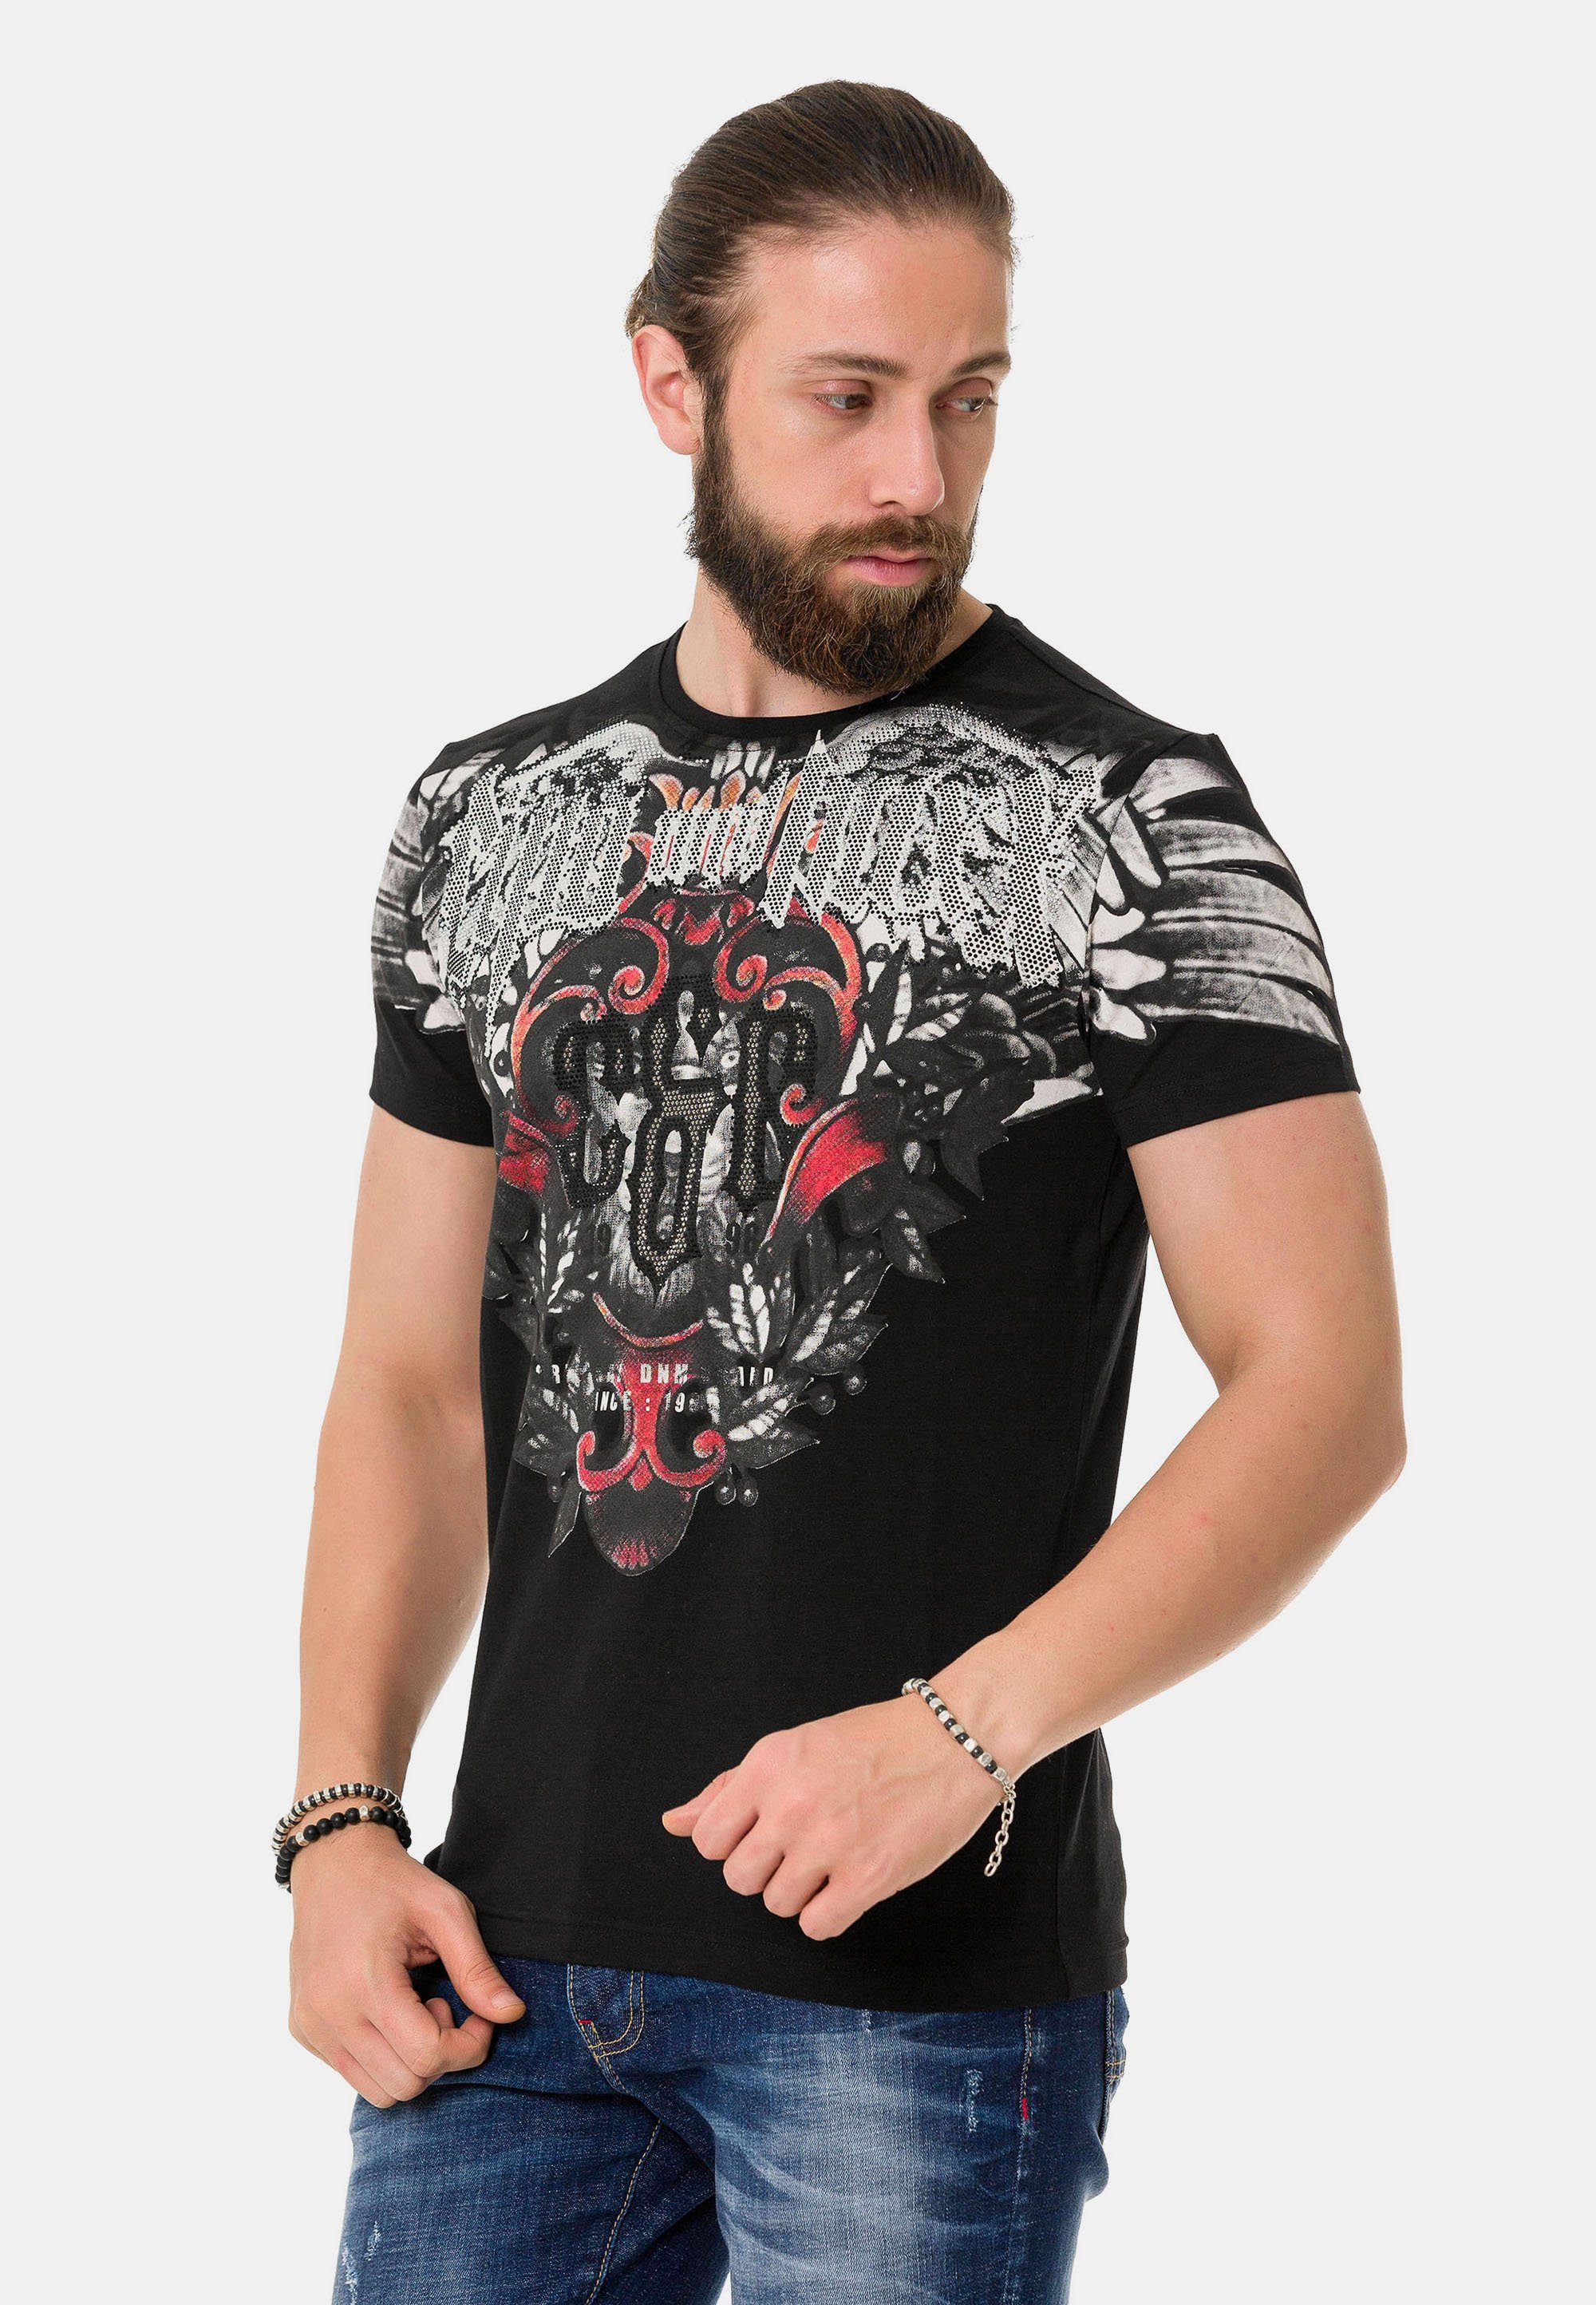 Baxx rockigem T-Shirt in Look Cipo & schwarz